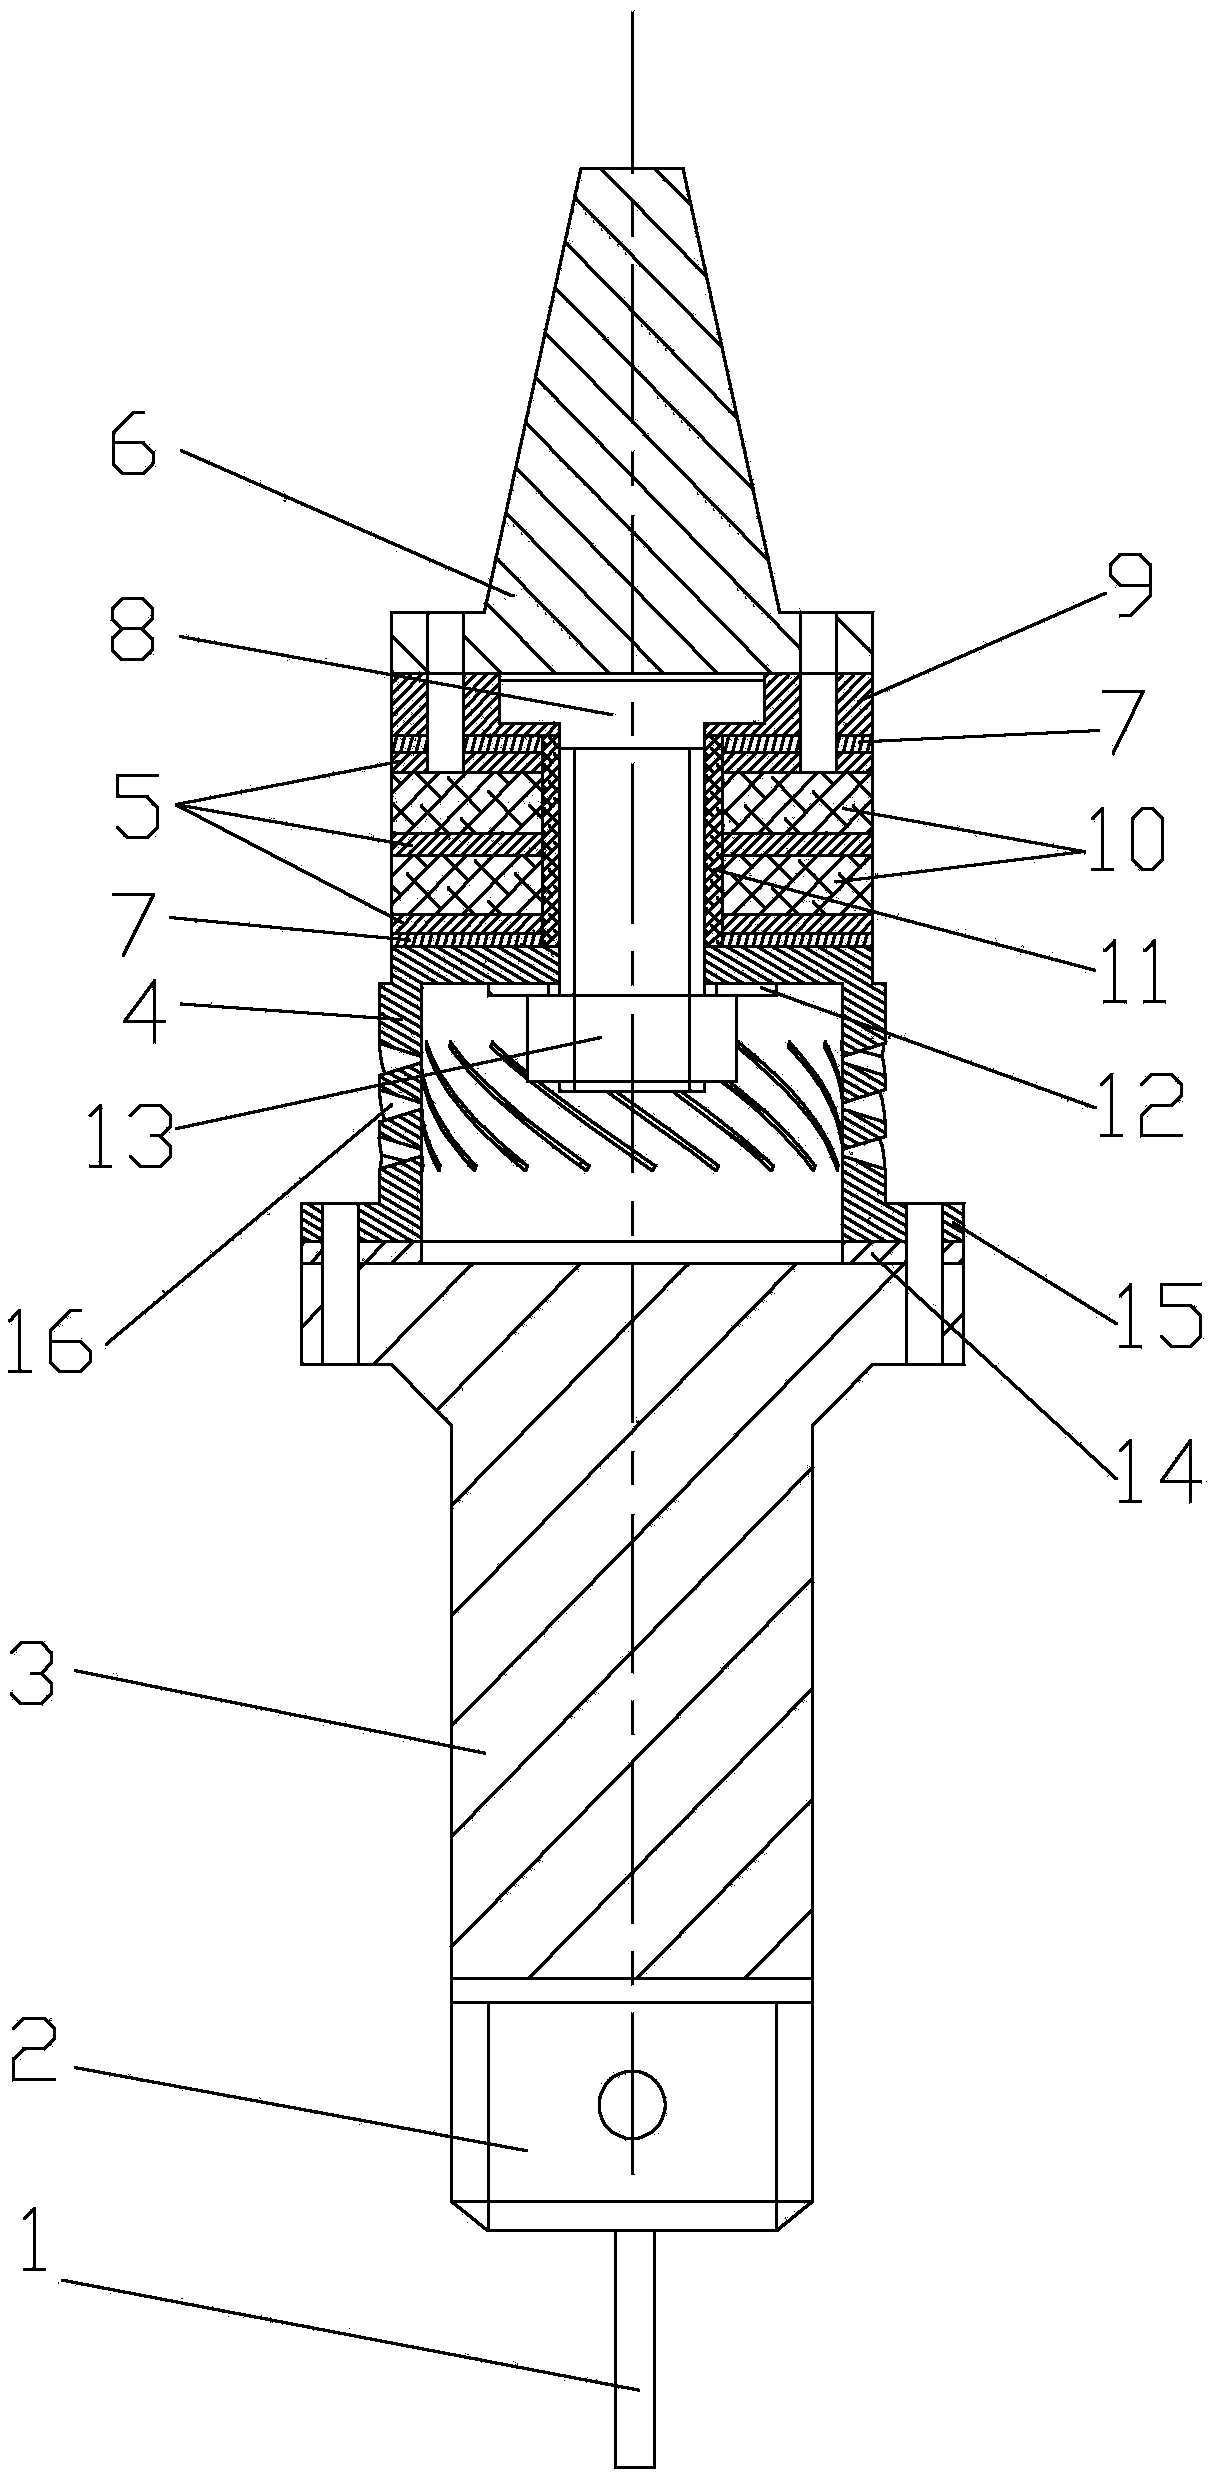 A Longitudinal-Torsion Compound Ultrasonic Vibration Cutting Device